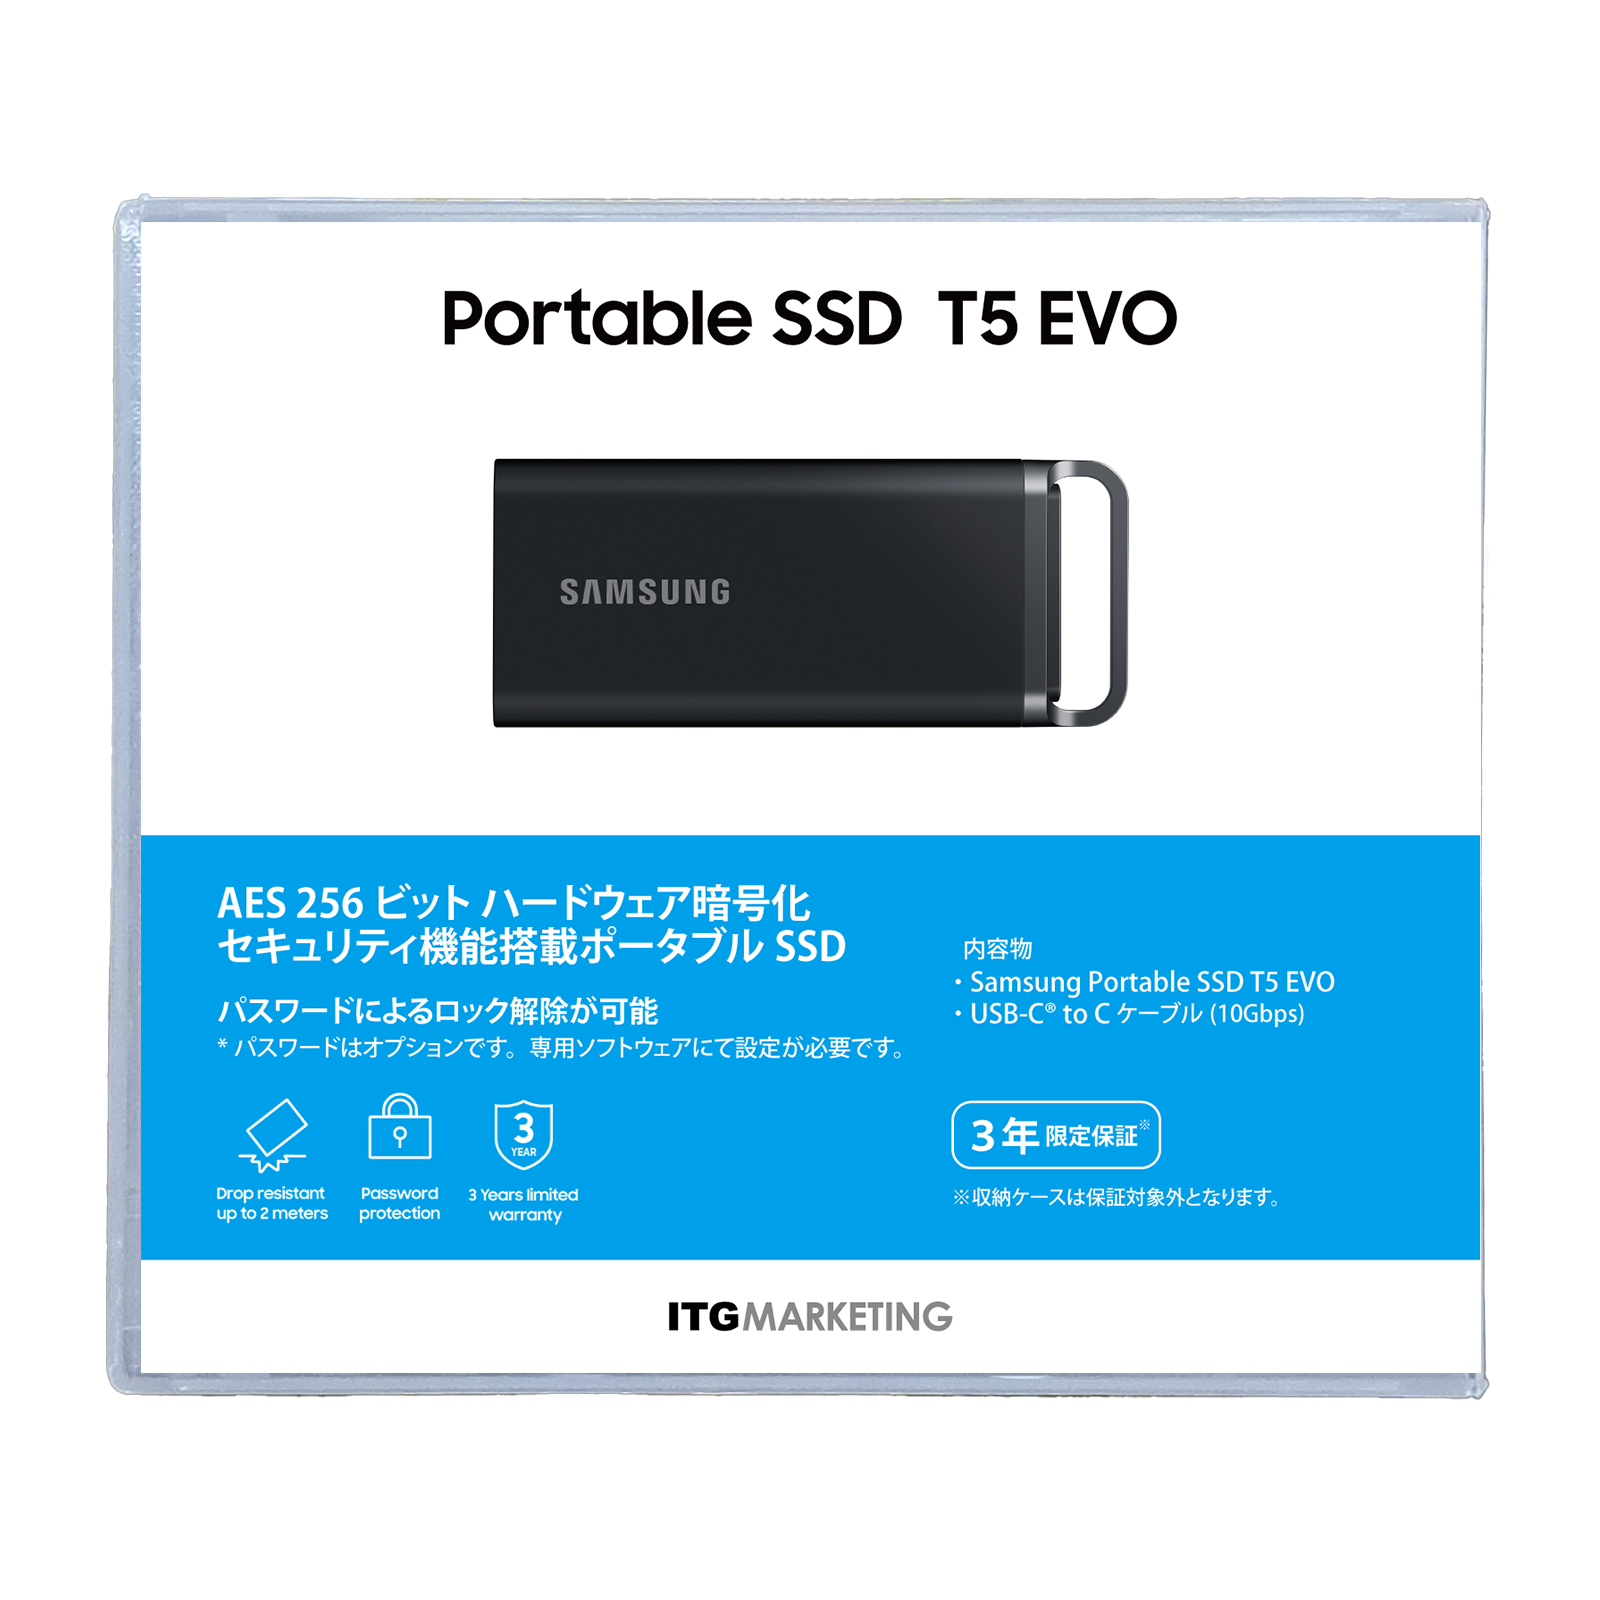 Samsung Portable SSD T5 EVO（4TB）放送局向け専用ケース入りモデル